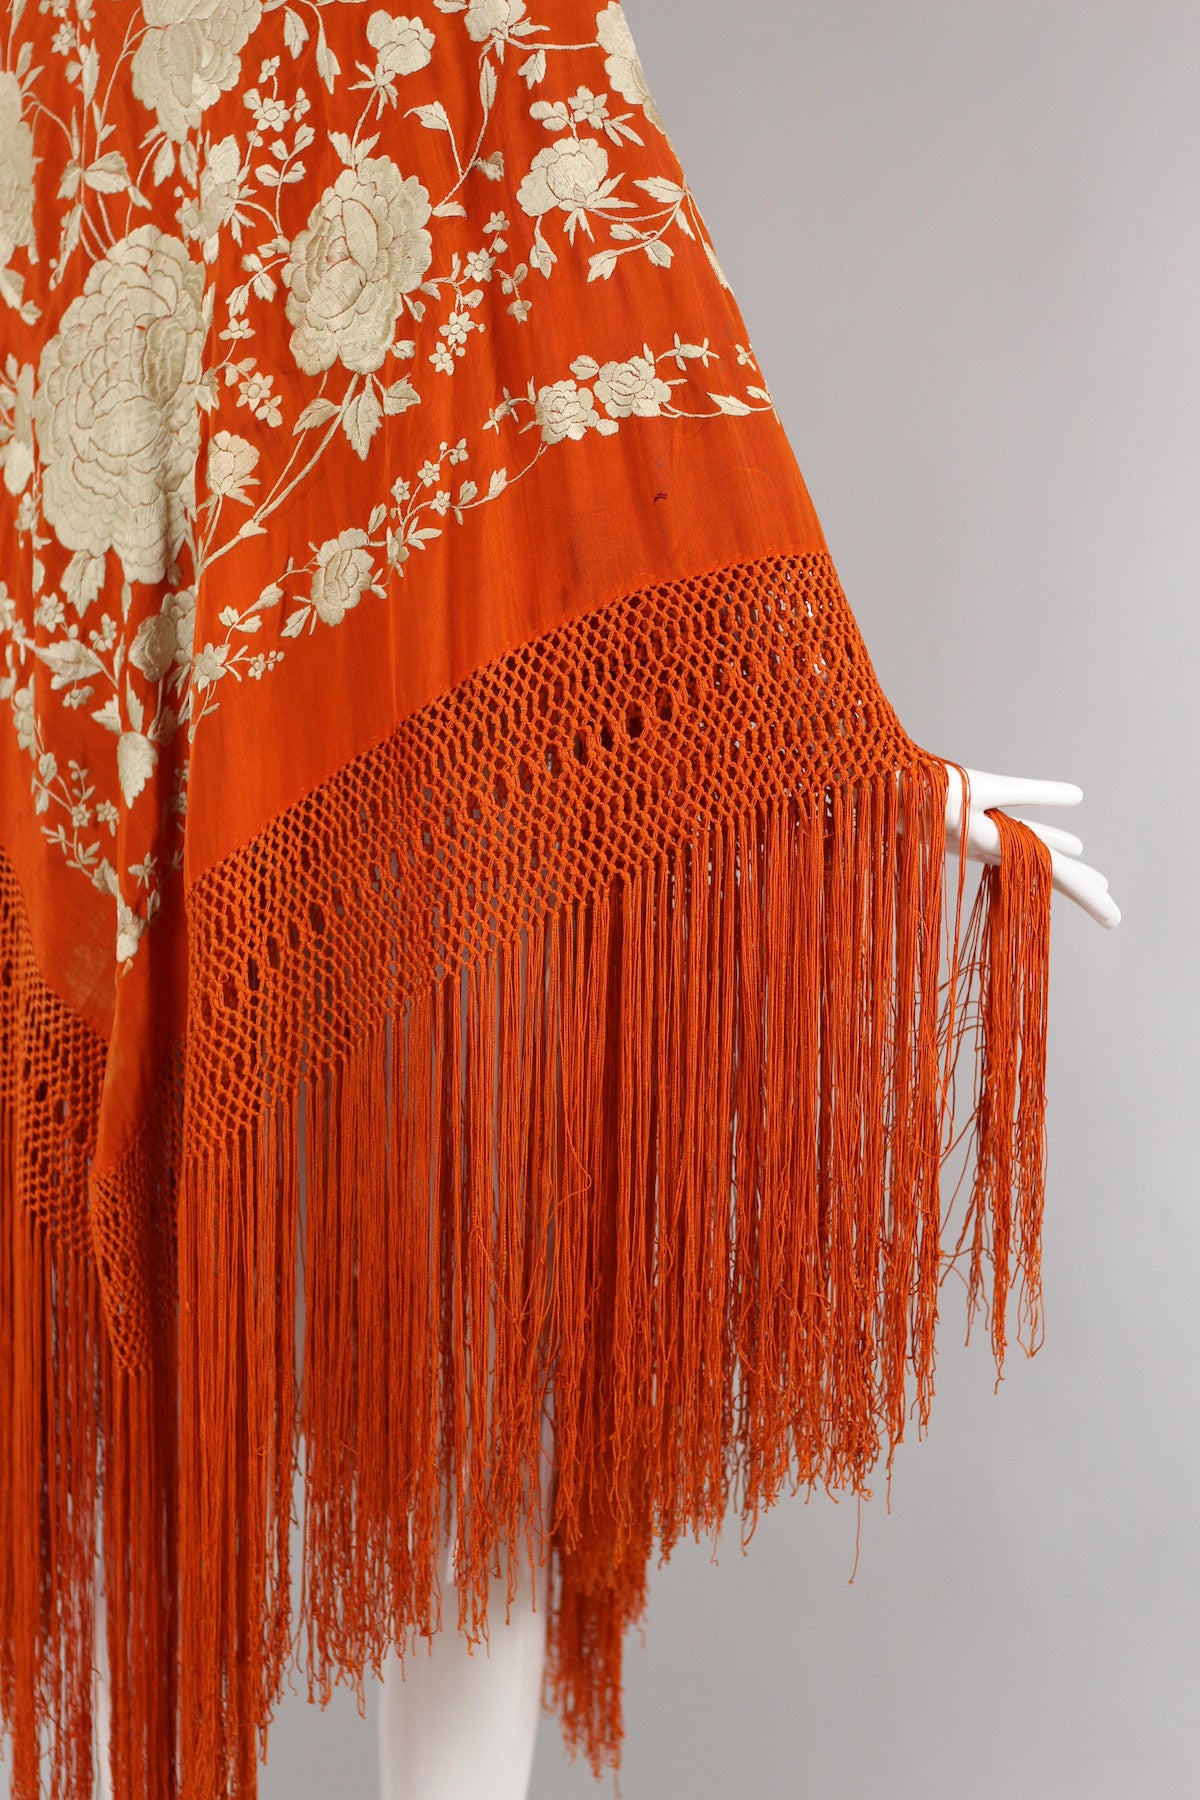 Unusual Late 19th Century Antique Orange Silk Piano Shawl of Hand Knotting